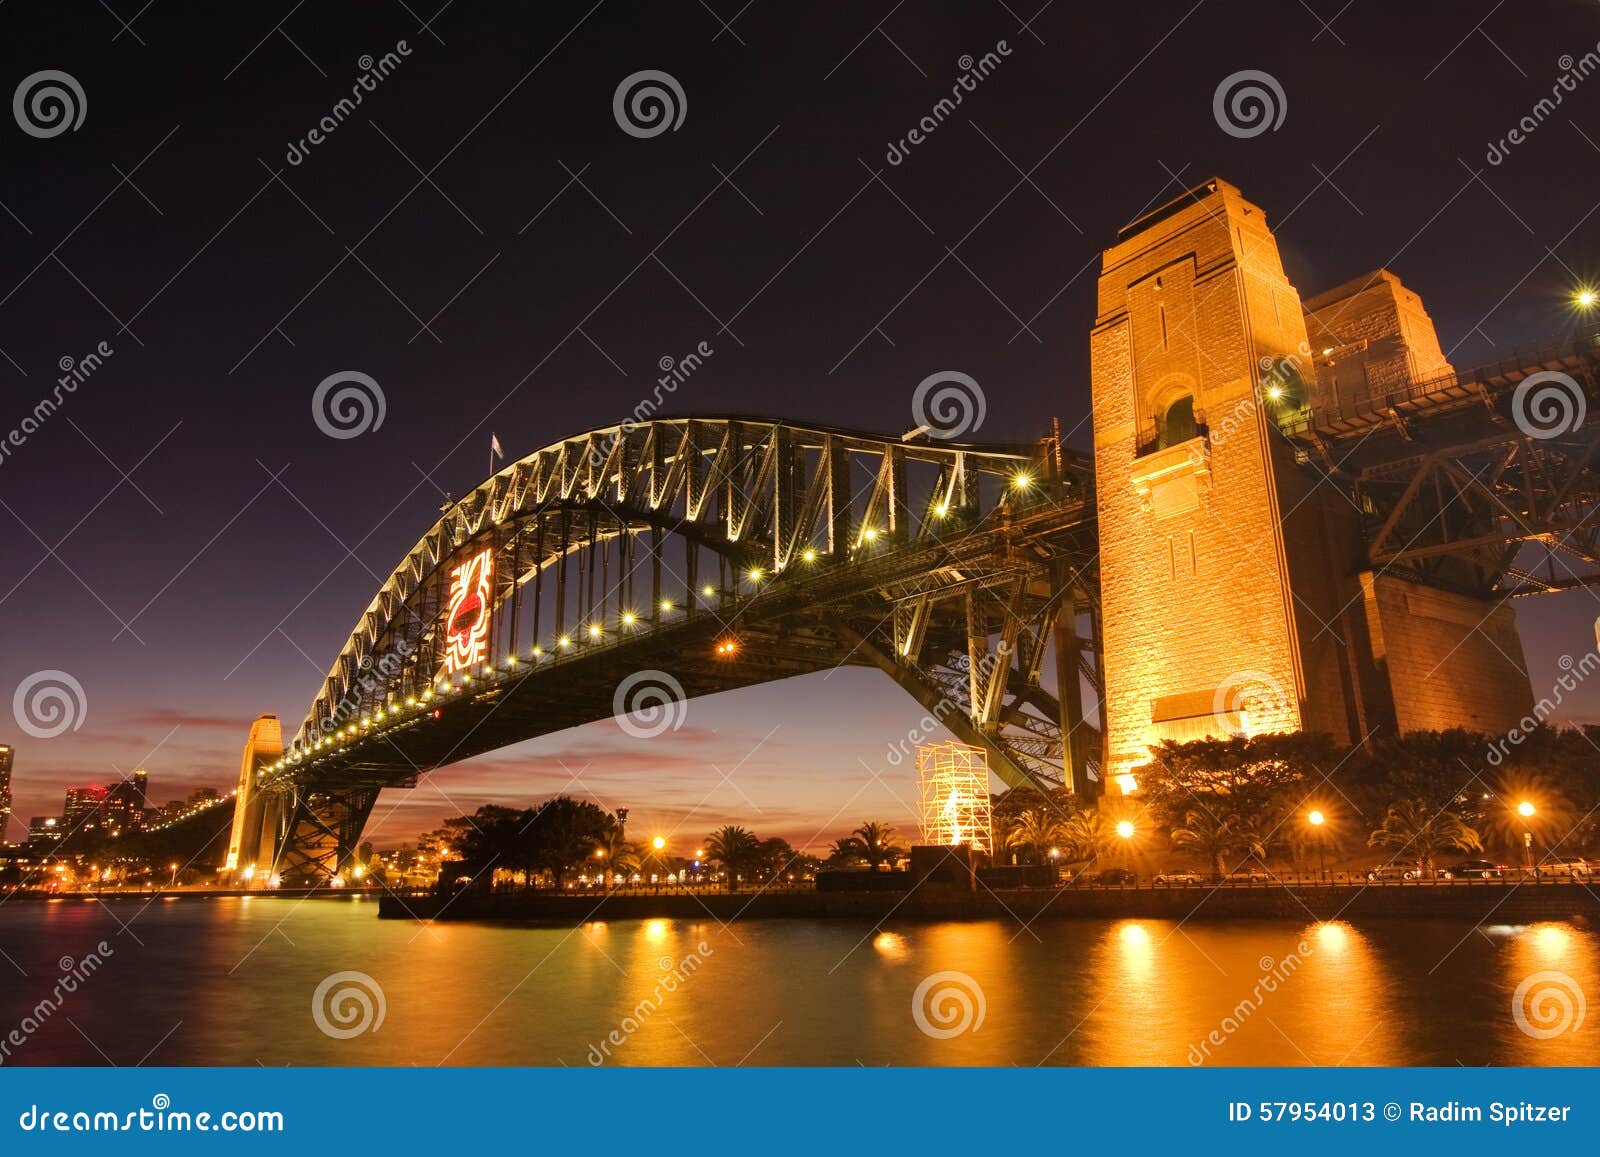 Sydney Harbour Bridge just before sunset.